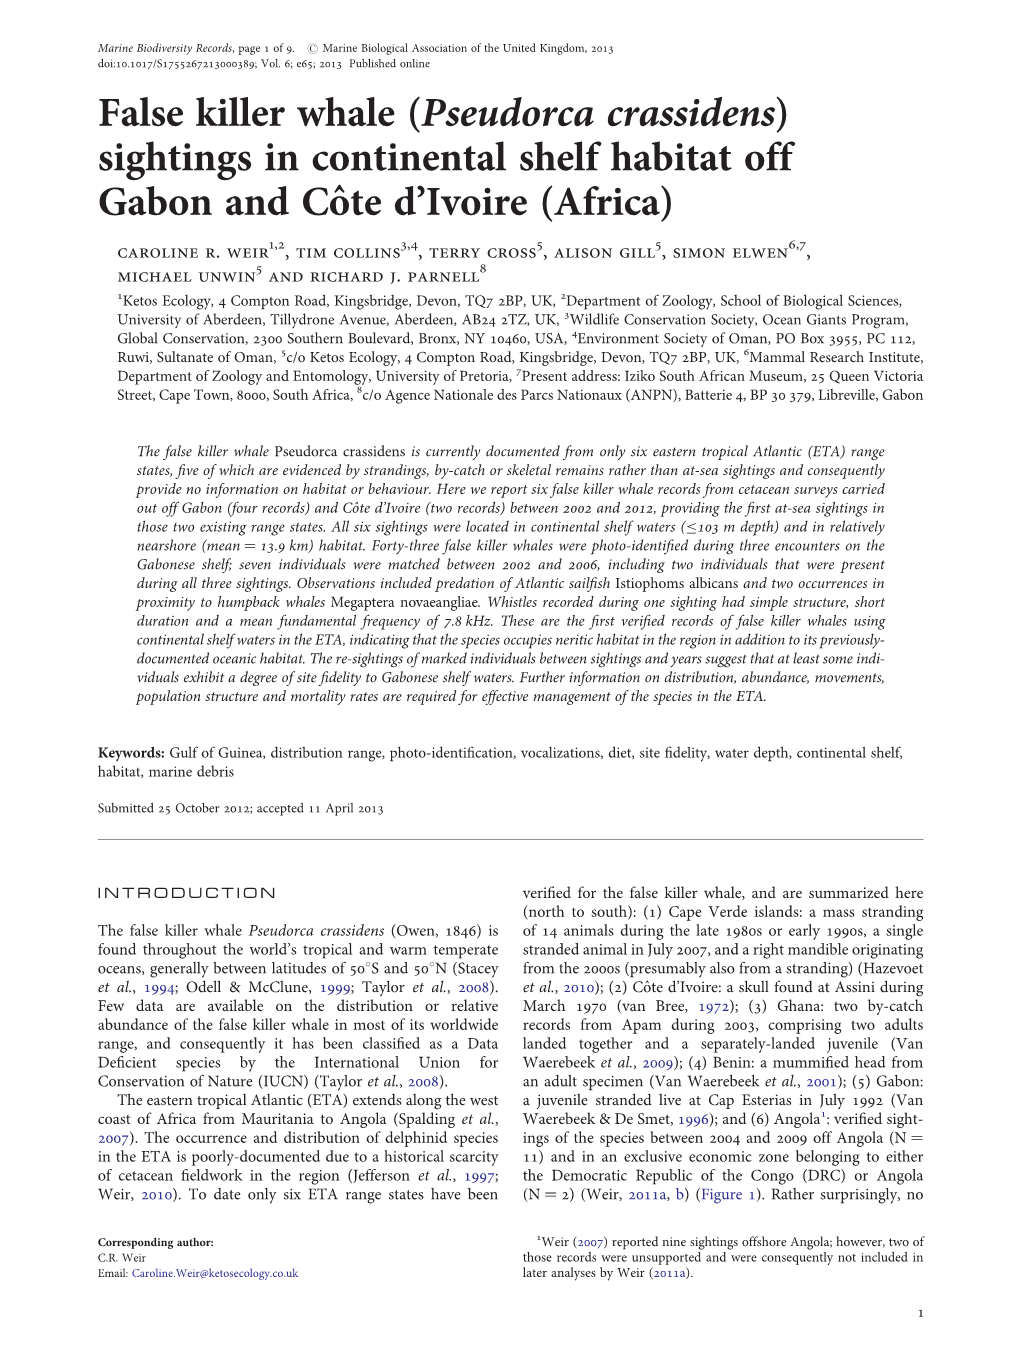 False Killer Whale (Pseudorca Crassidens) Sightings in Continental Shelf Habitat Off Gabon and Coˆte D’Ivoire (Africa) Caroline R